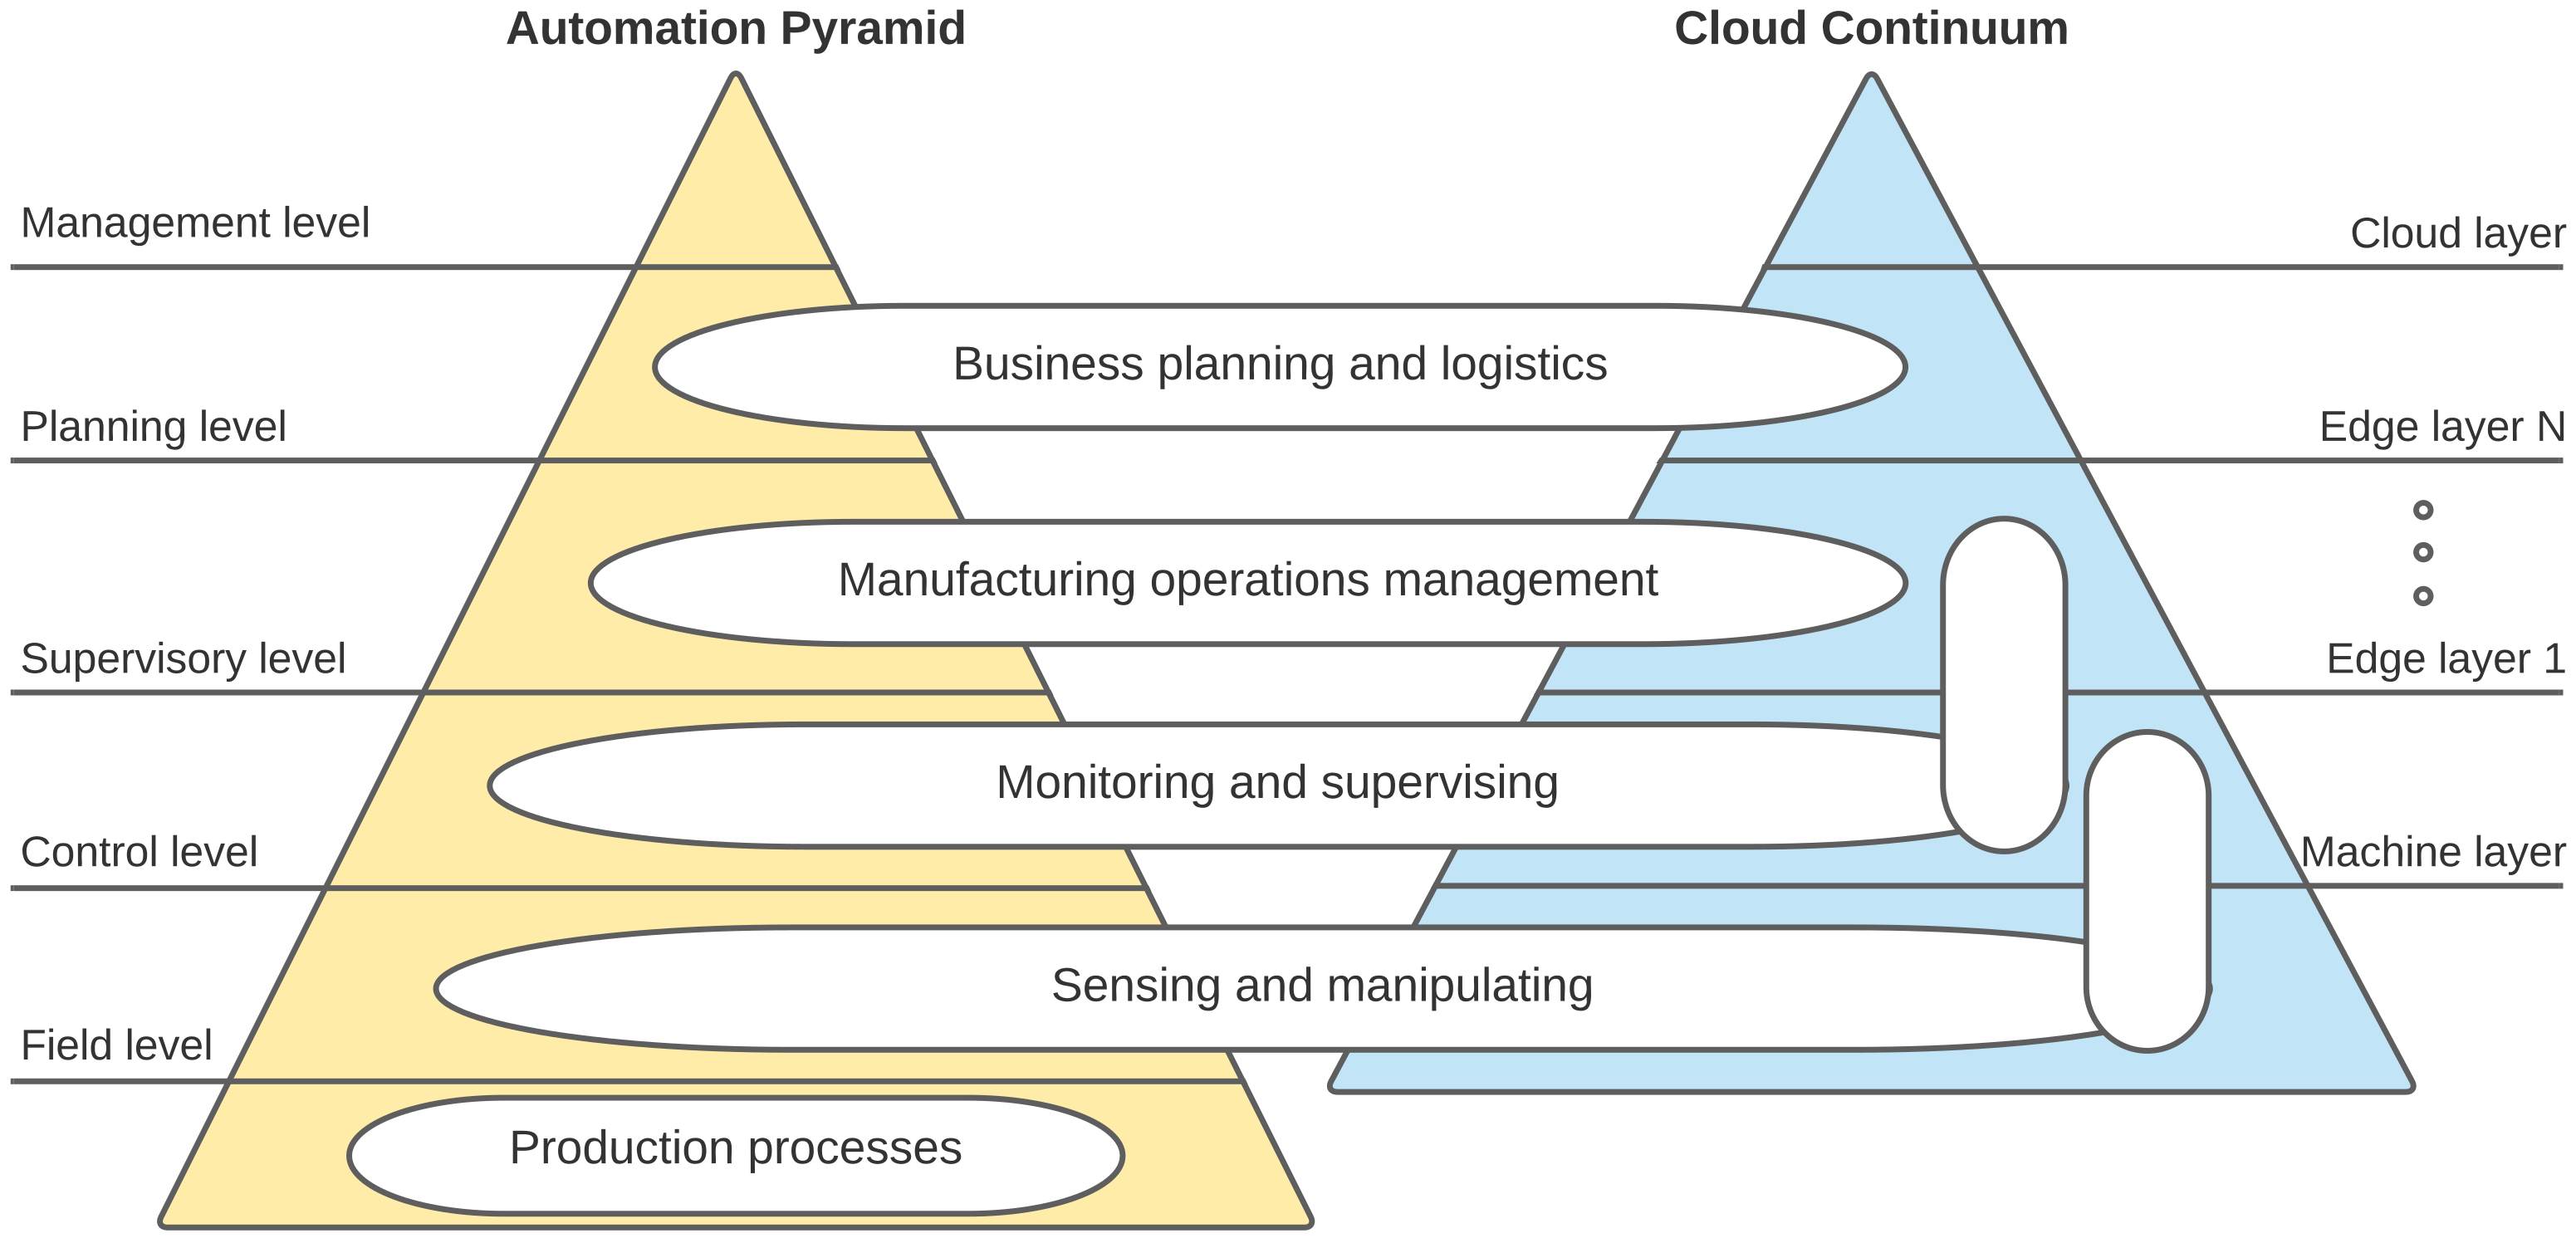 Automation Pyramid. Automation Pyramid and cloud. Automation Pyramid two layers. Континуум потребностей в контактах. Two layer